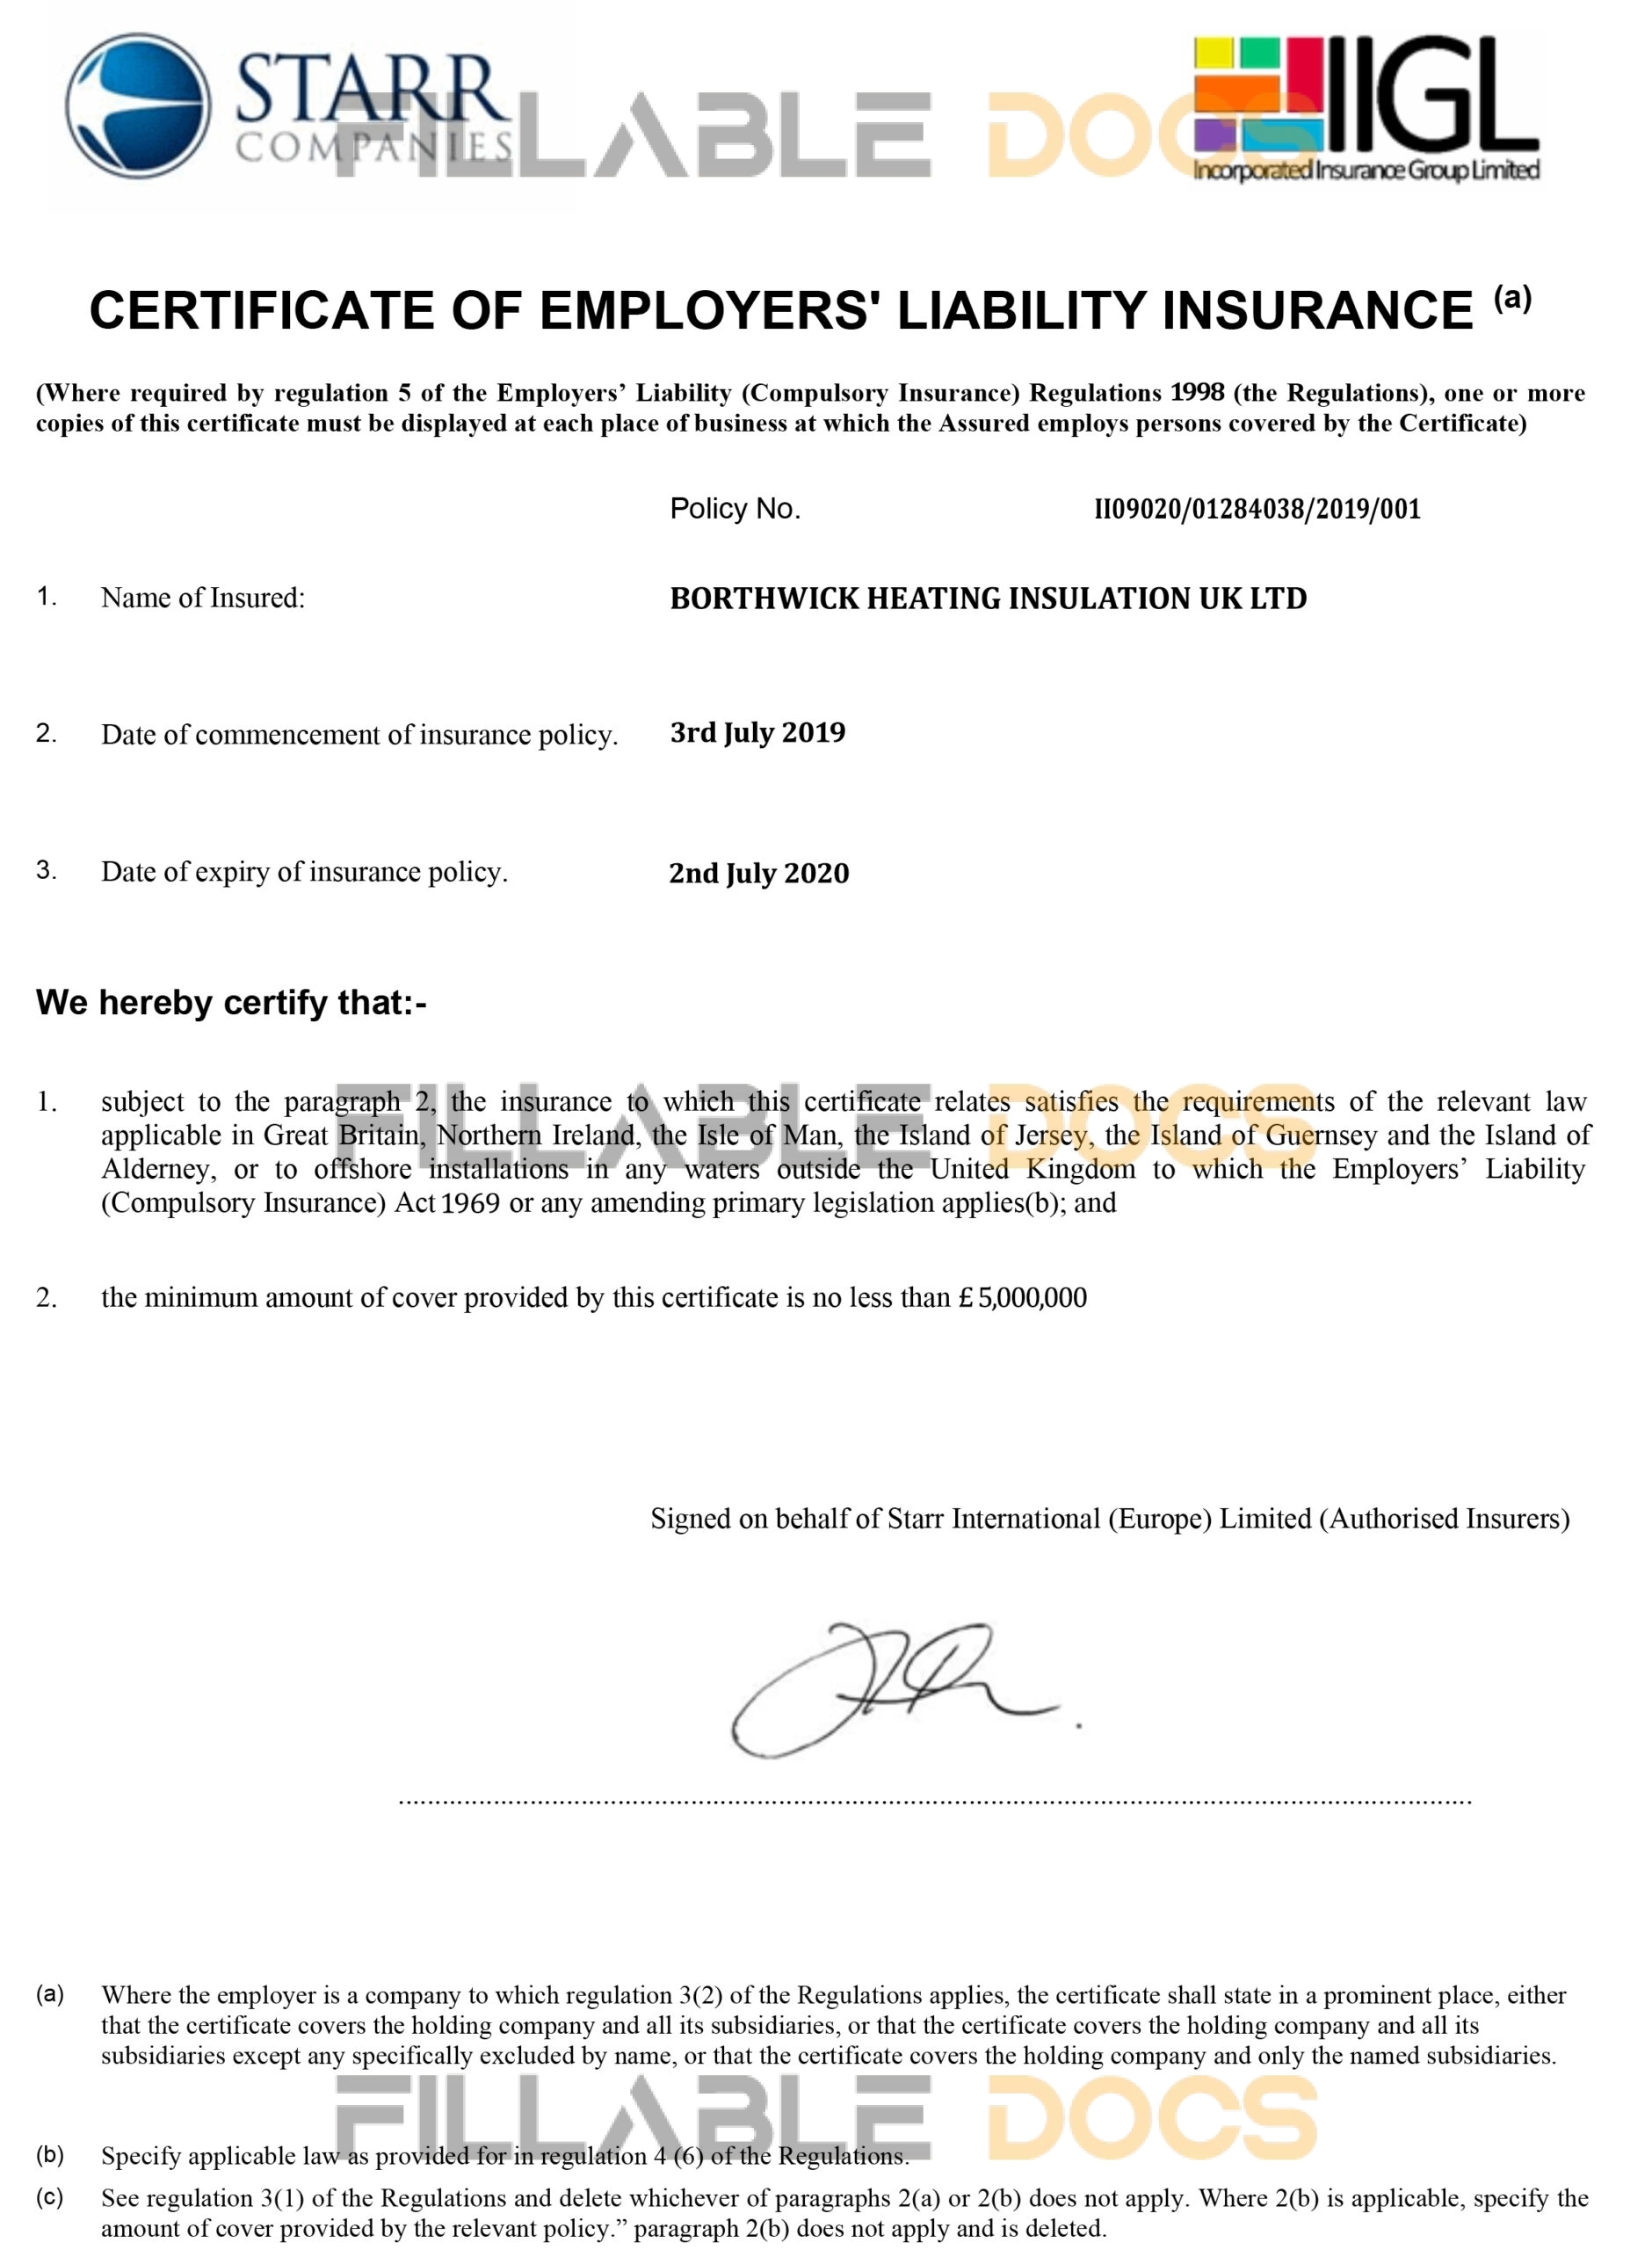 Customizable Fake Proof of IIGL employer liability Insurance